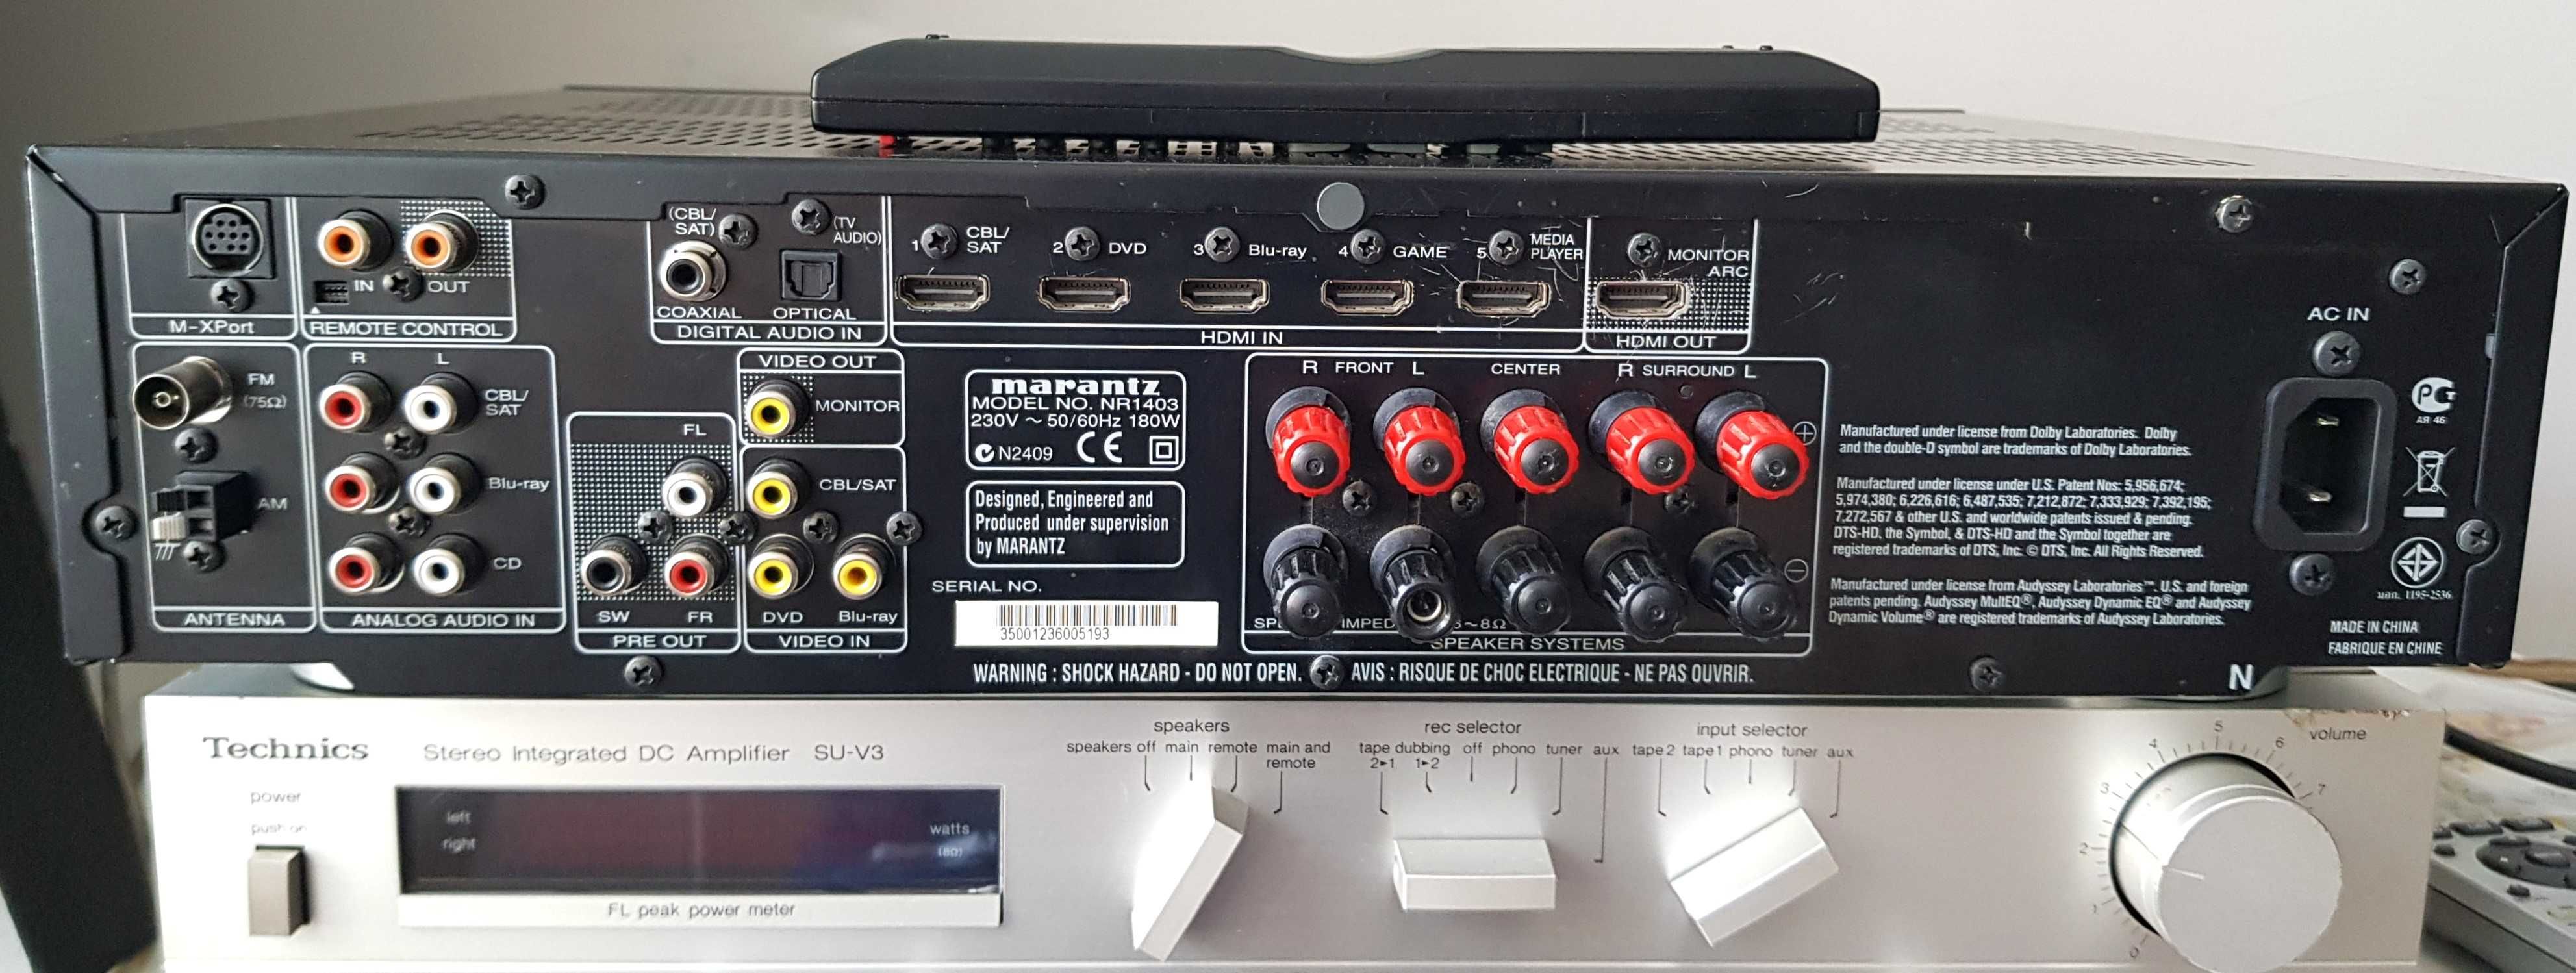 Marantz NR 1403 amplificator stereo si multicanal 5.1 telecomanda